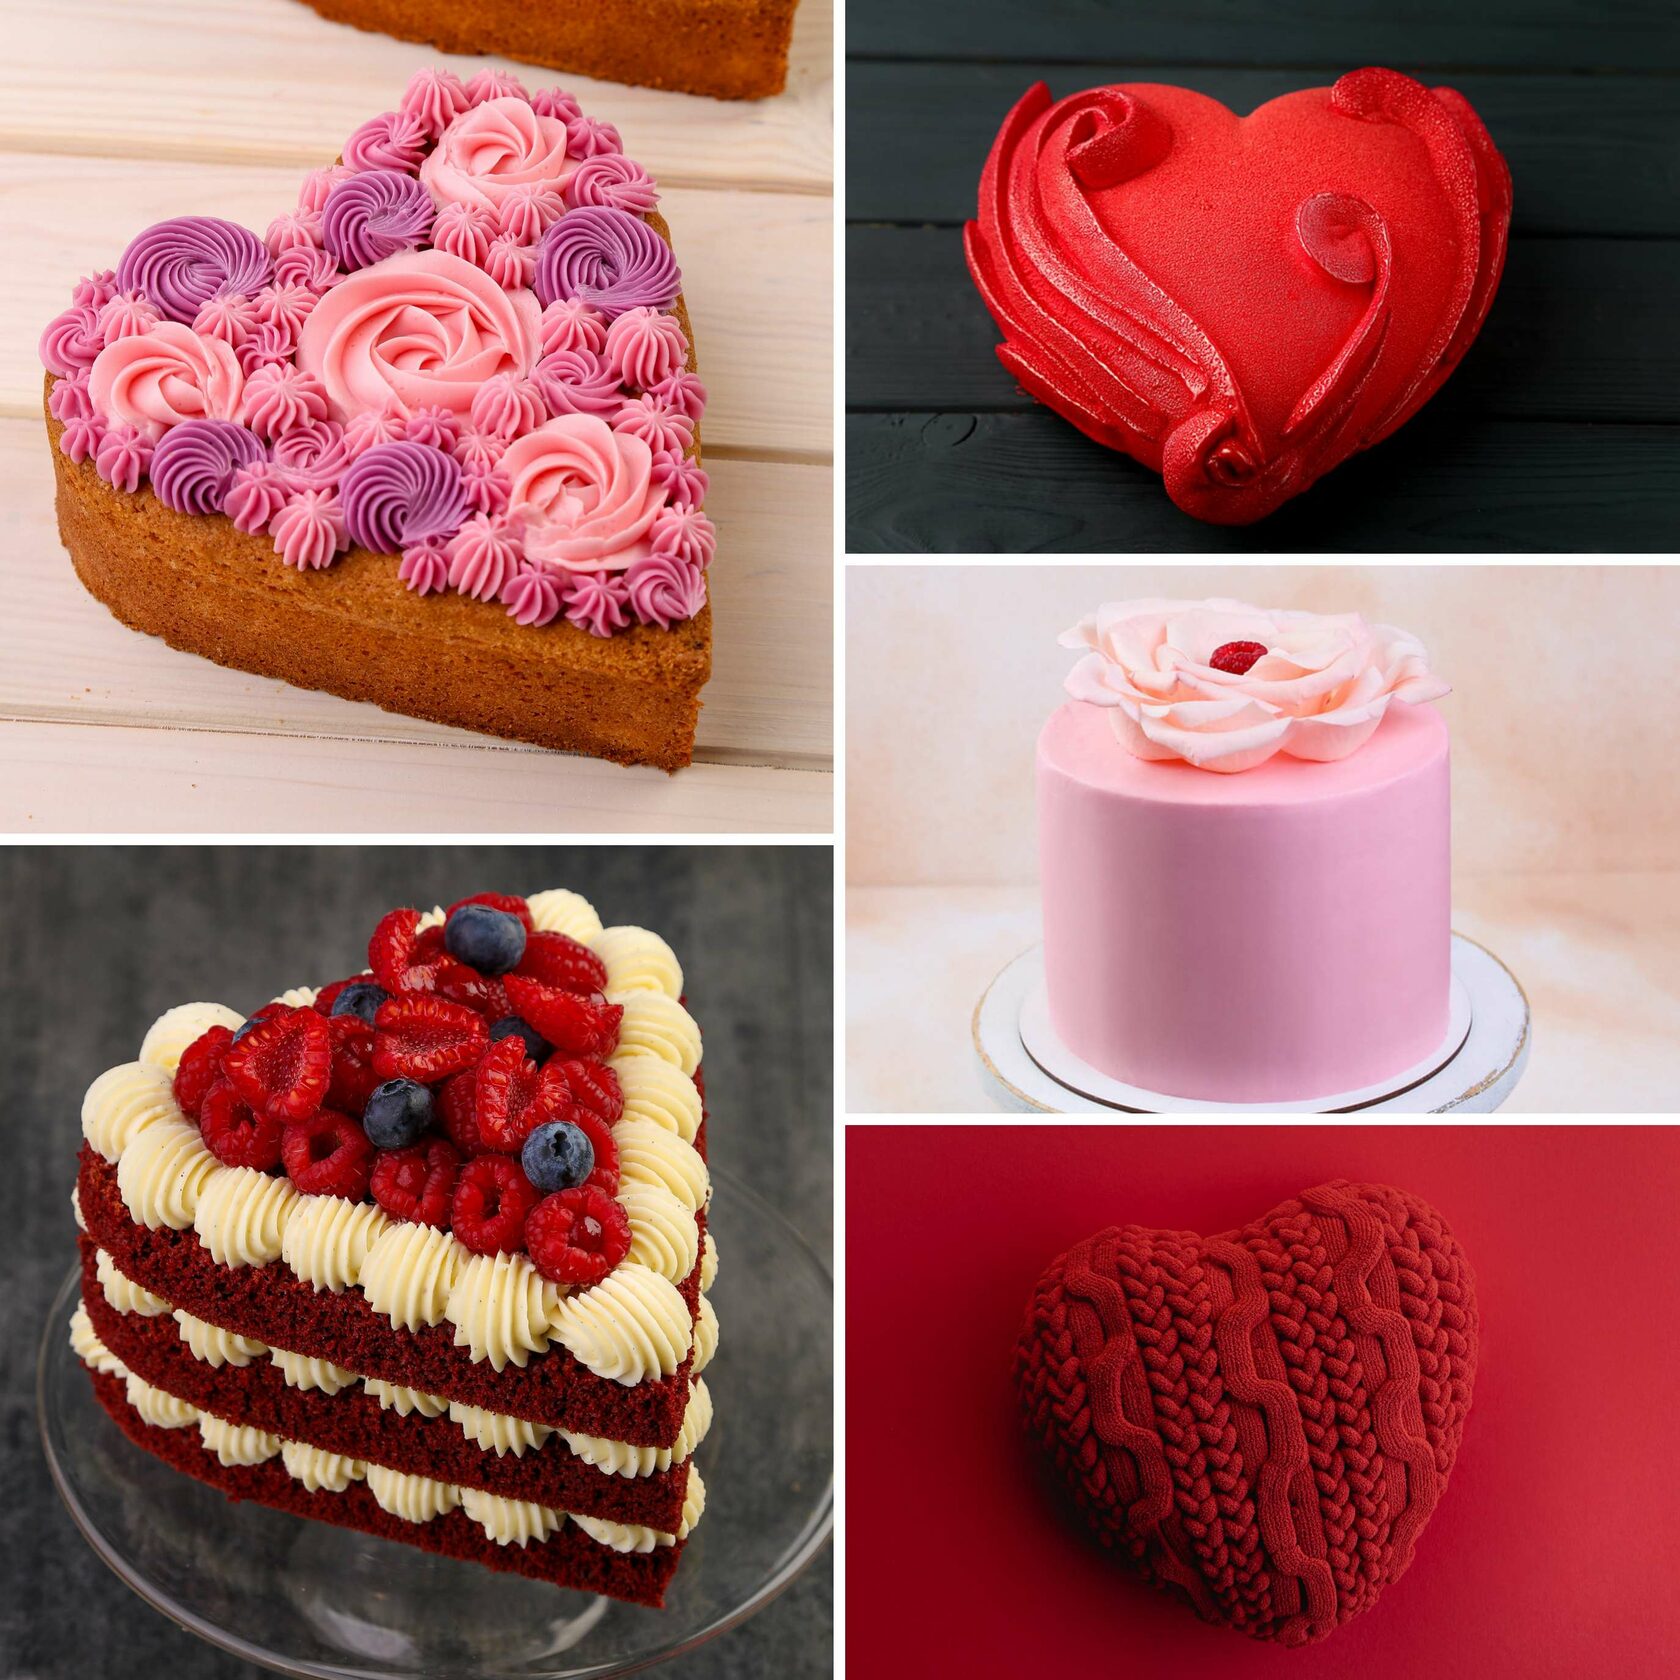 Customized Flowers Pink Valentine Cake By bakisto - the cake company